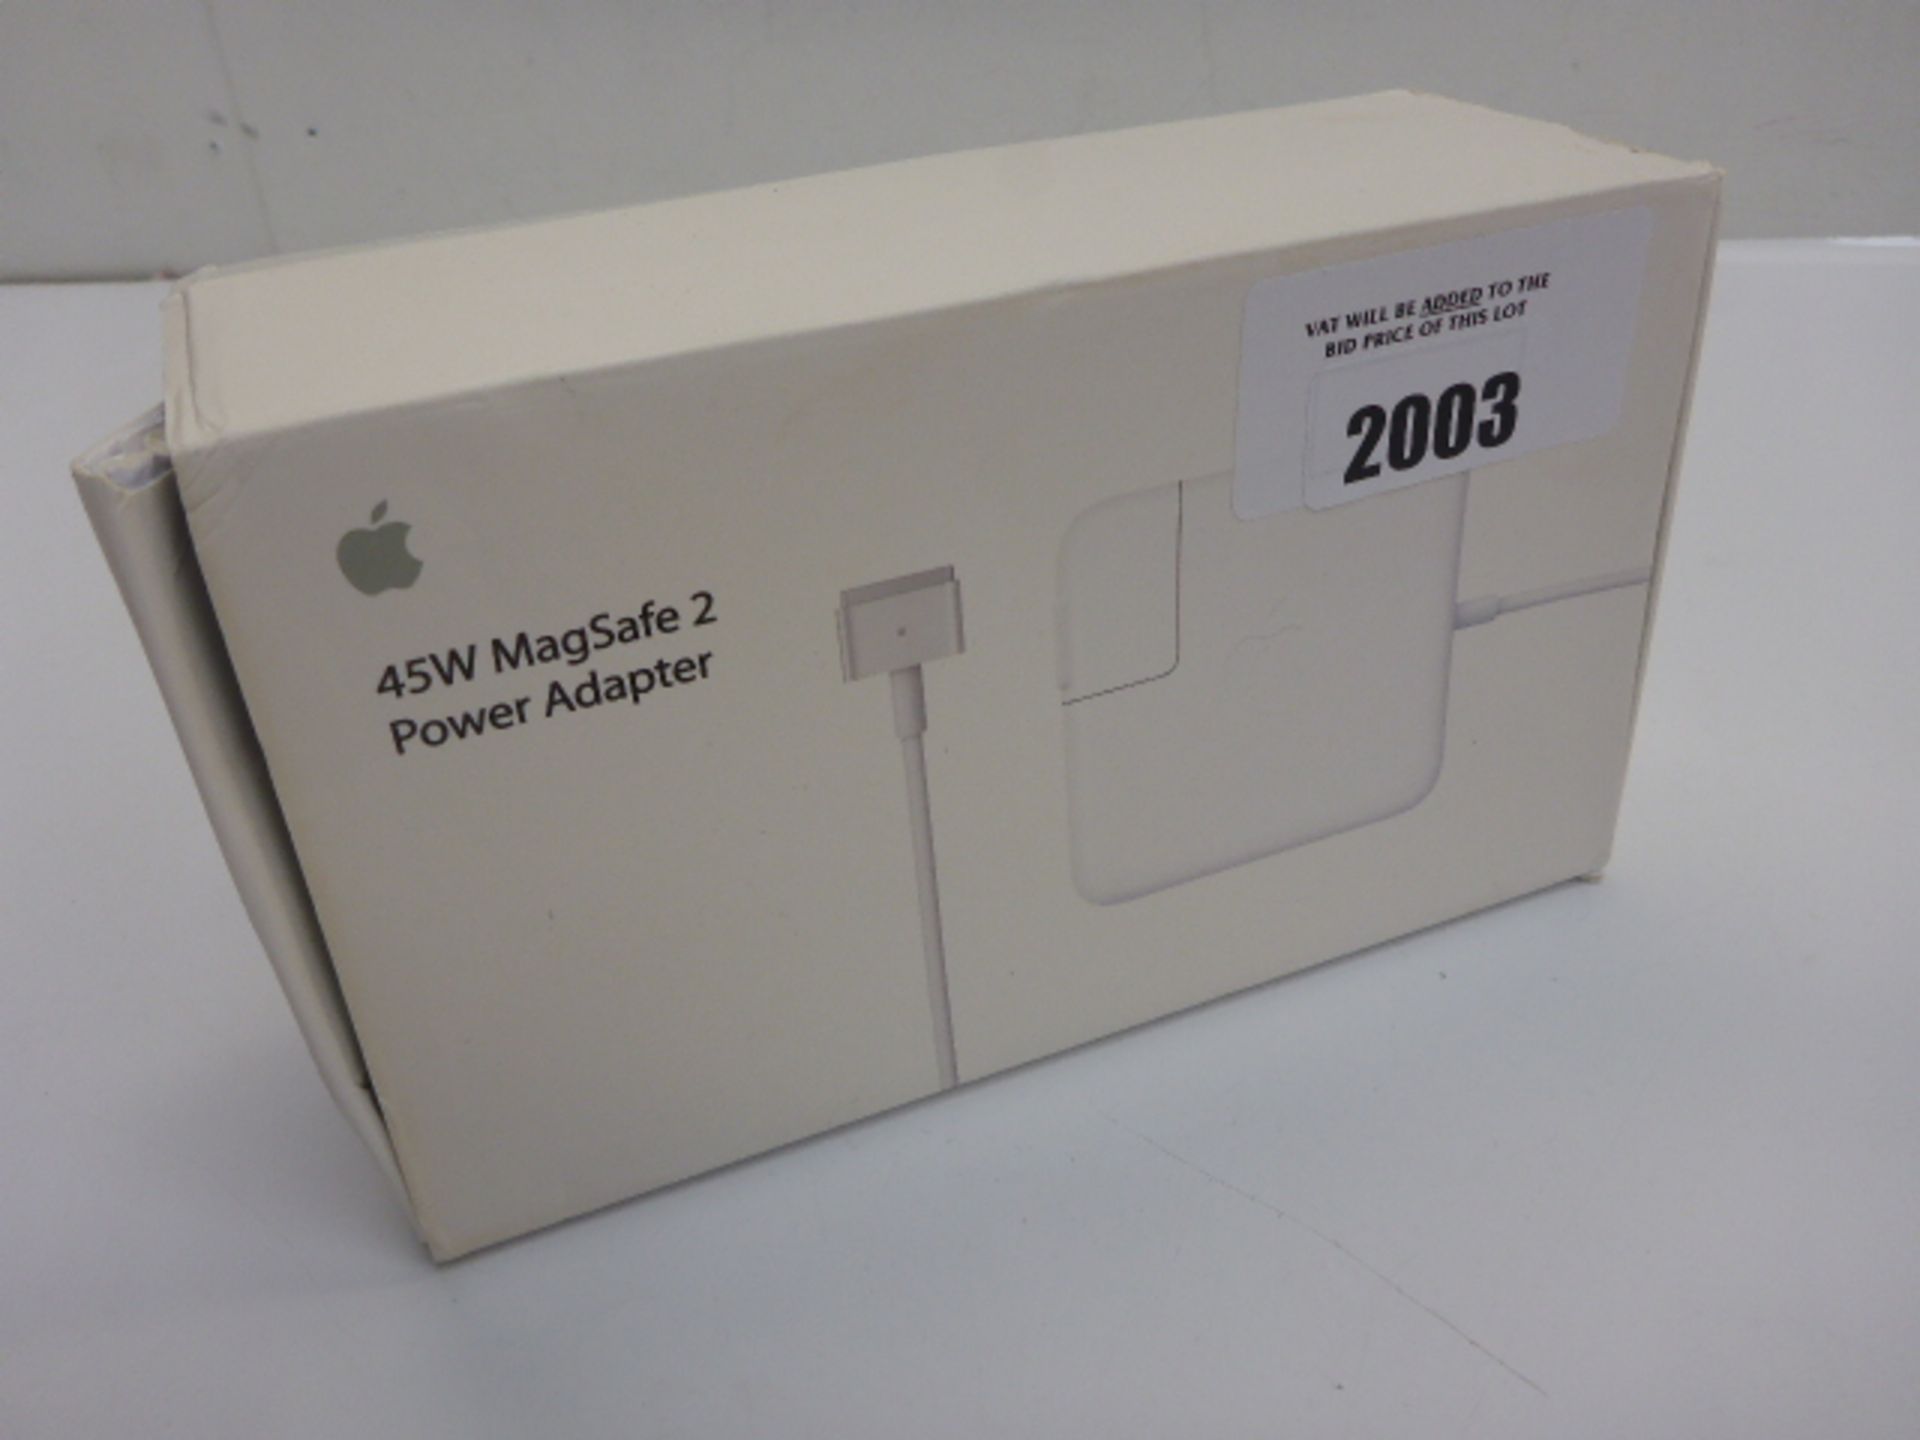 Apple 45W Magsafe 2 power adaptor.